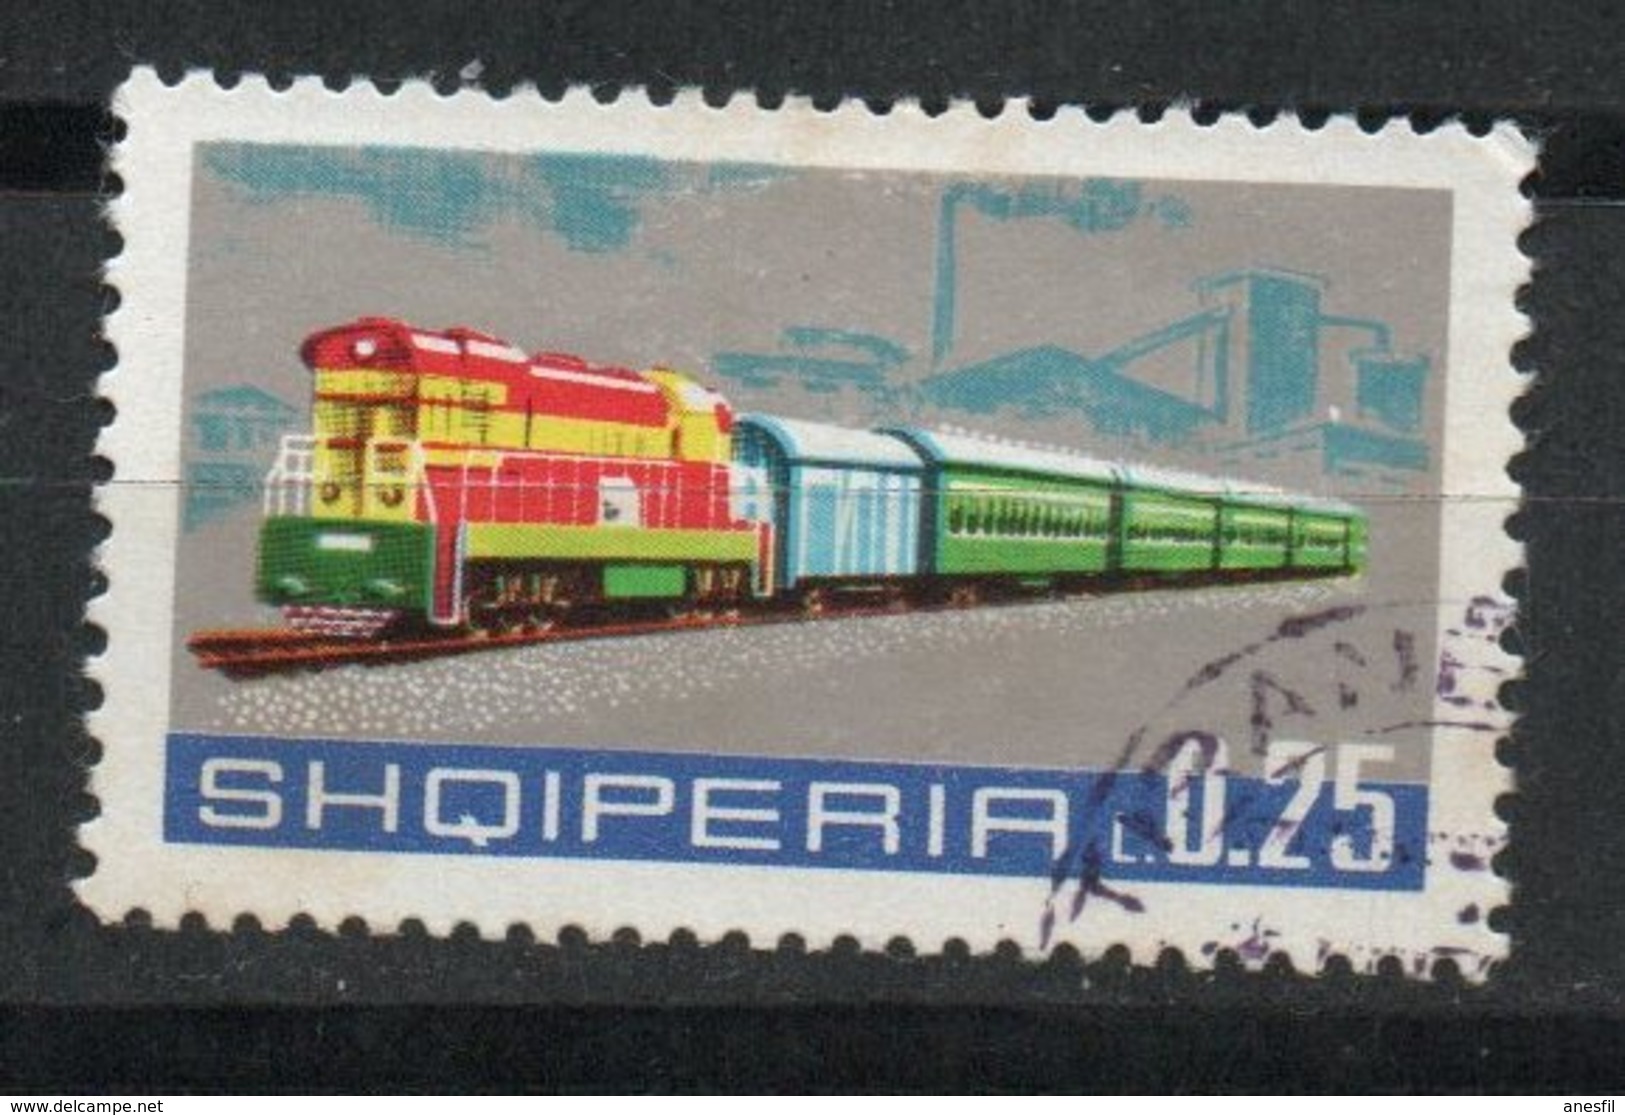 Ref: 1432. Albania. Medio De Transporte. Locomotora Diesel. - Albania